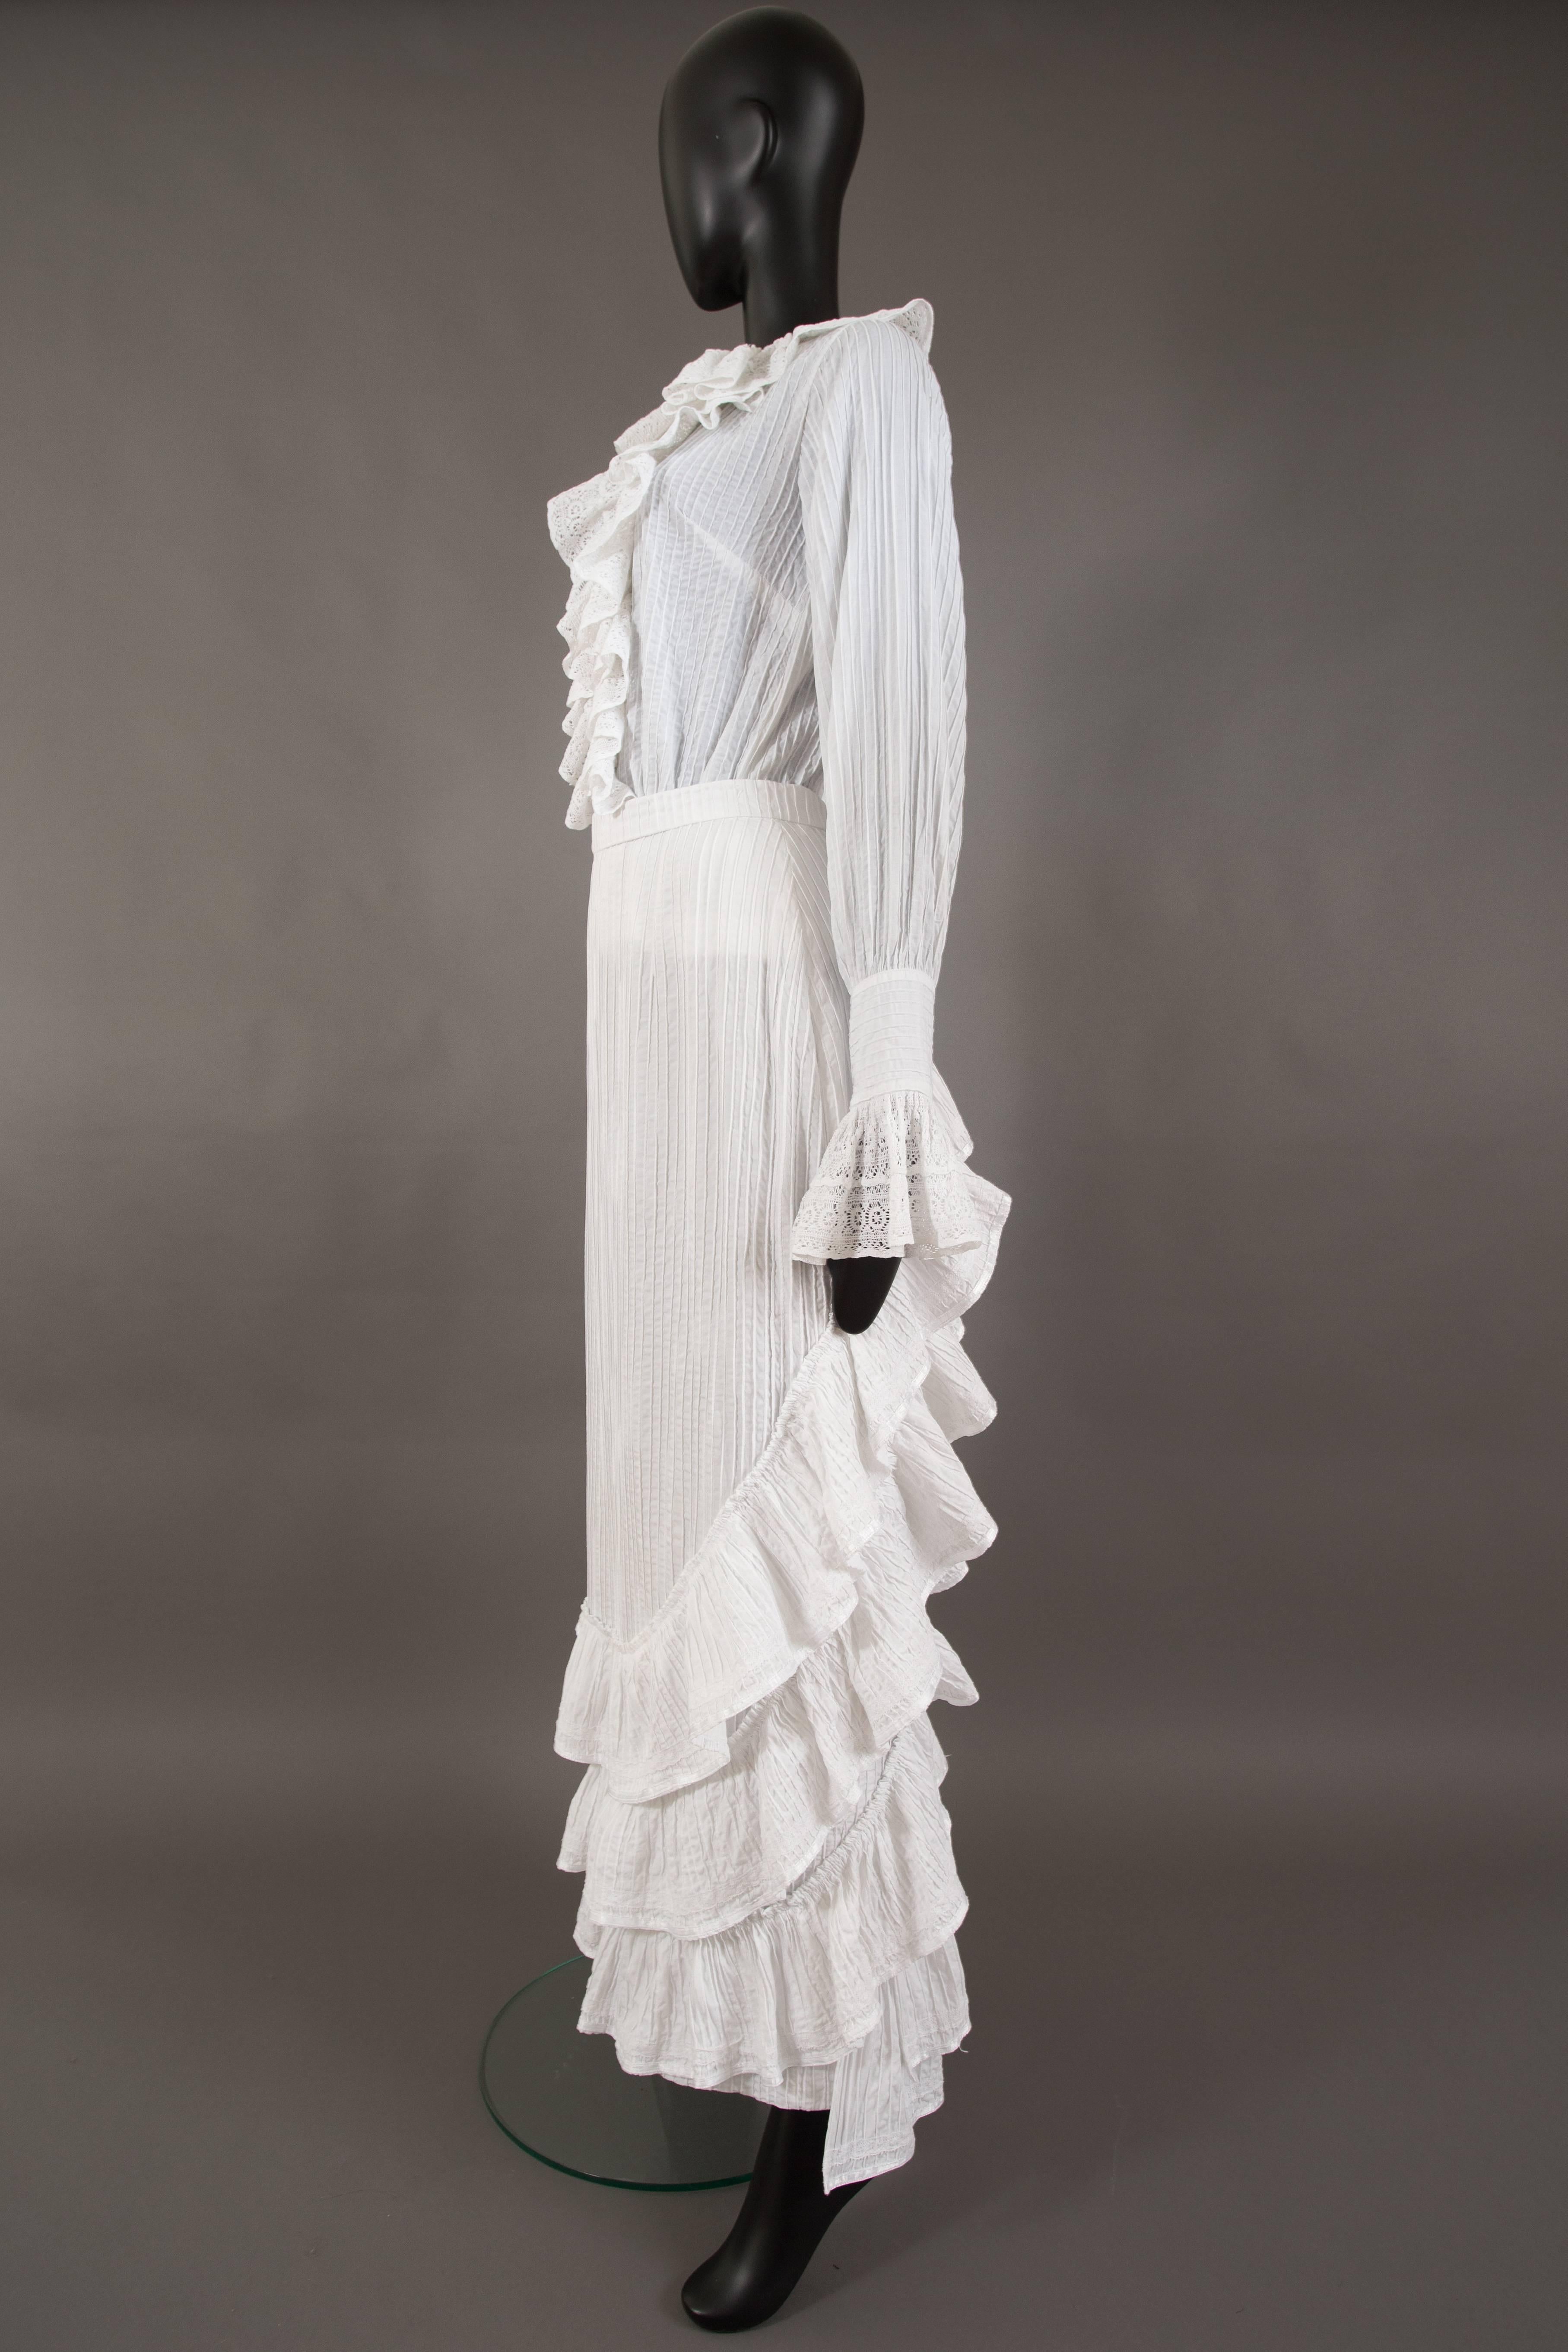 Women's Mexicana white pintucked cotton and lace ensemble, circa 1960